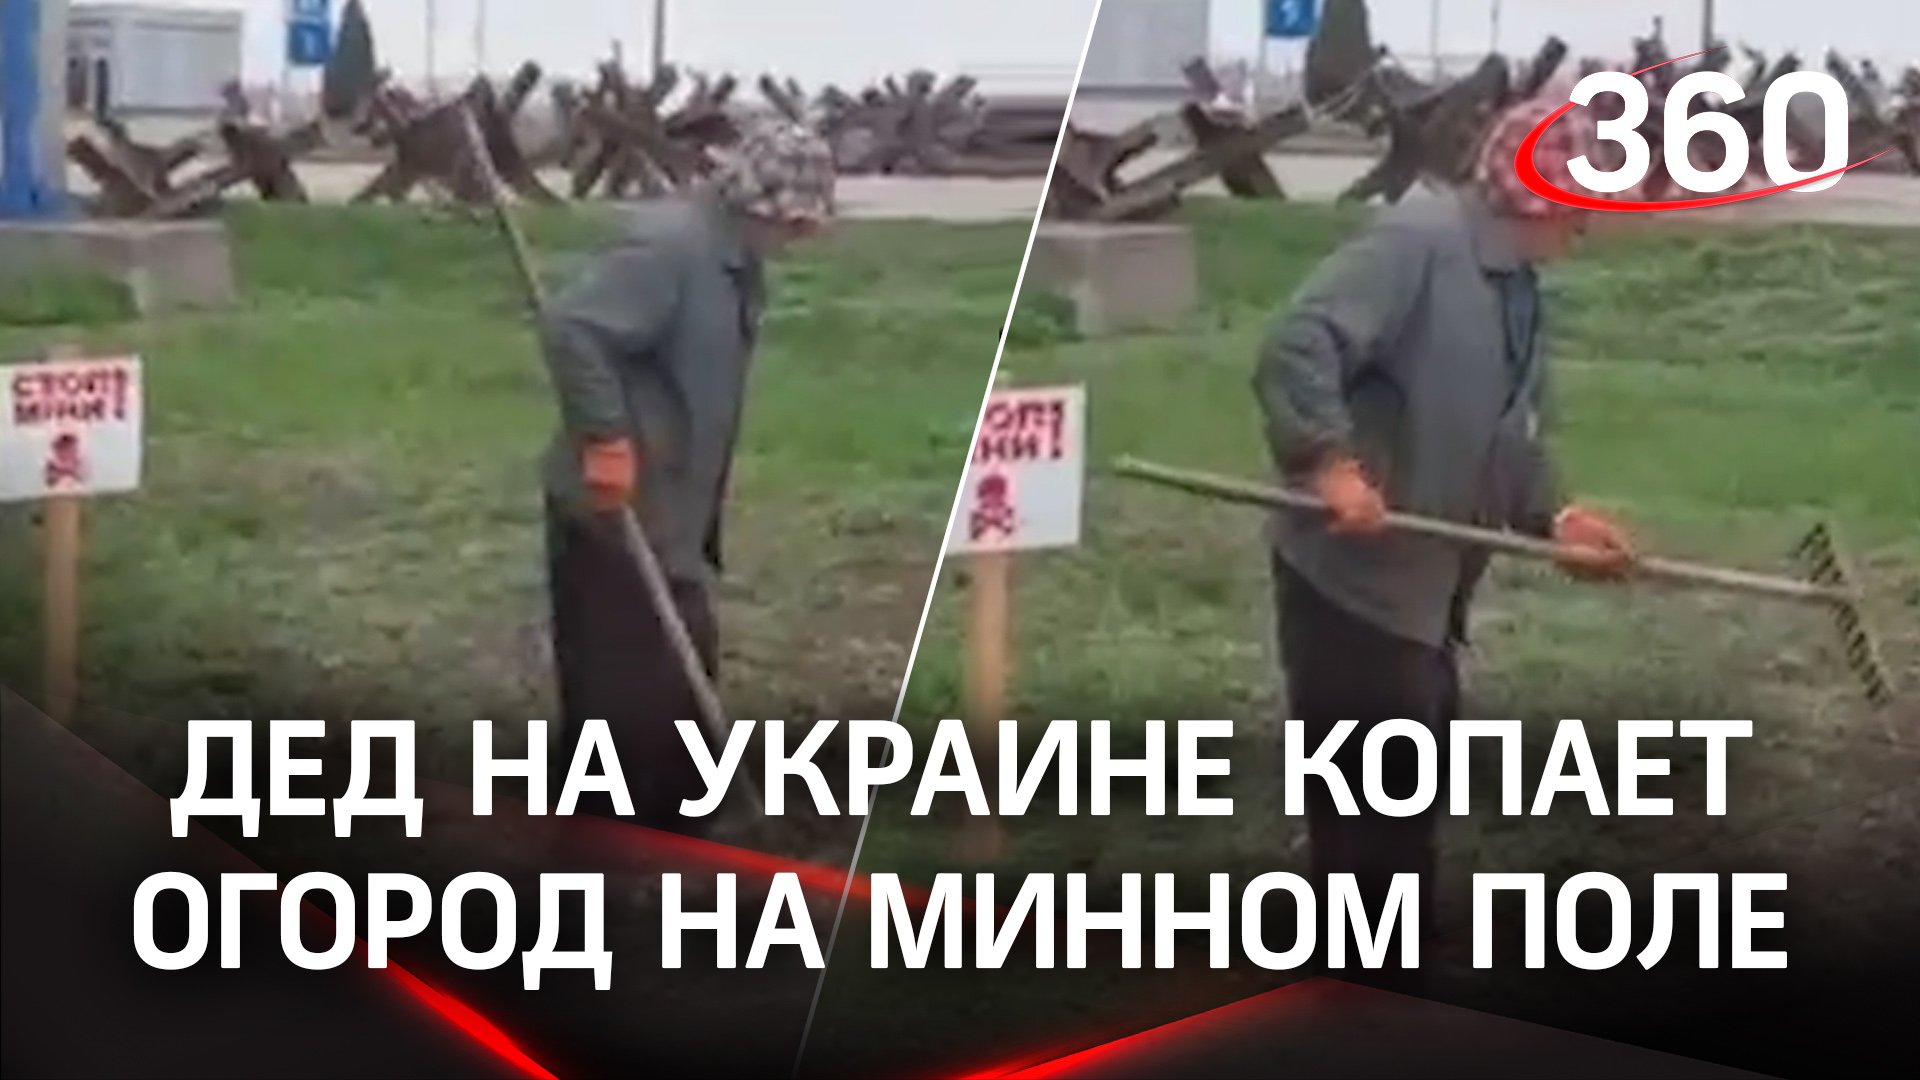 Дед на Украине копает огород на минном поле